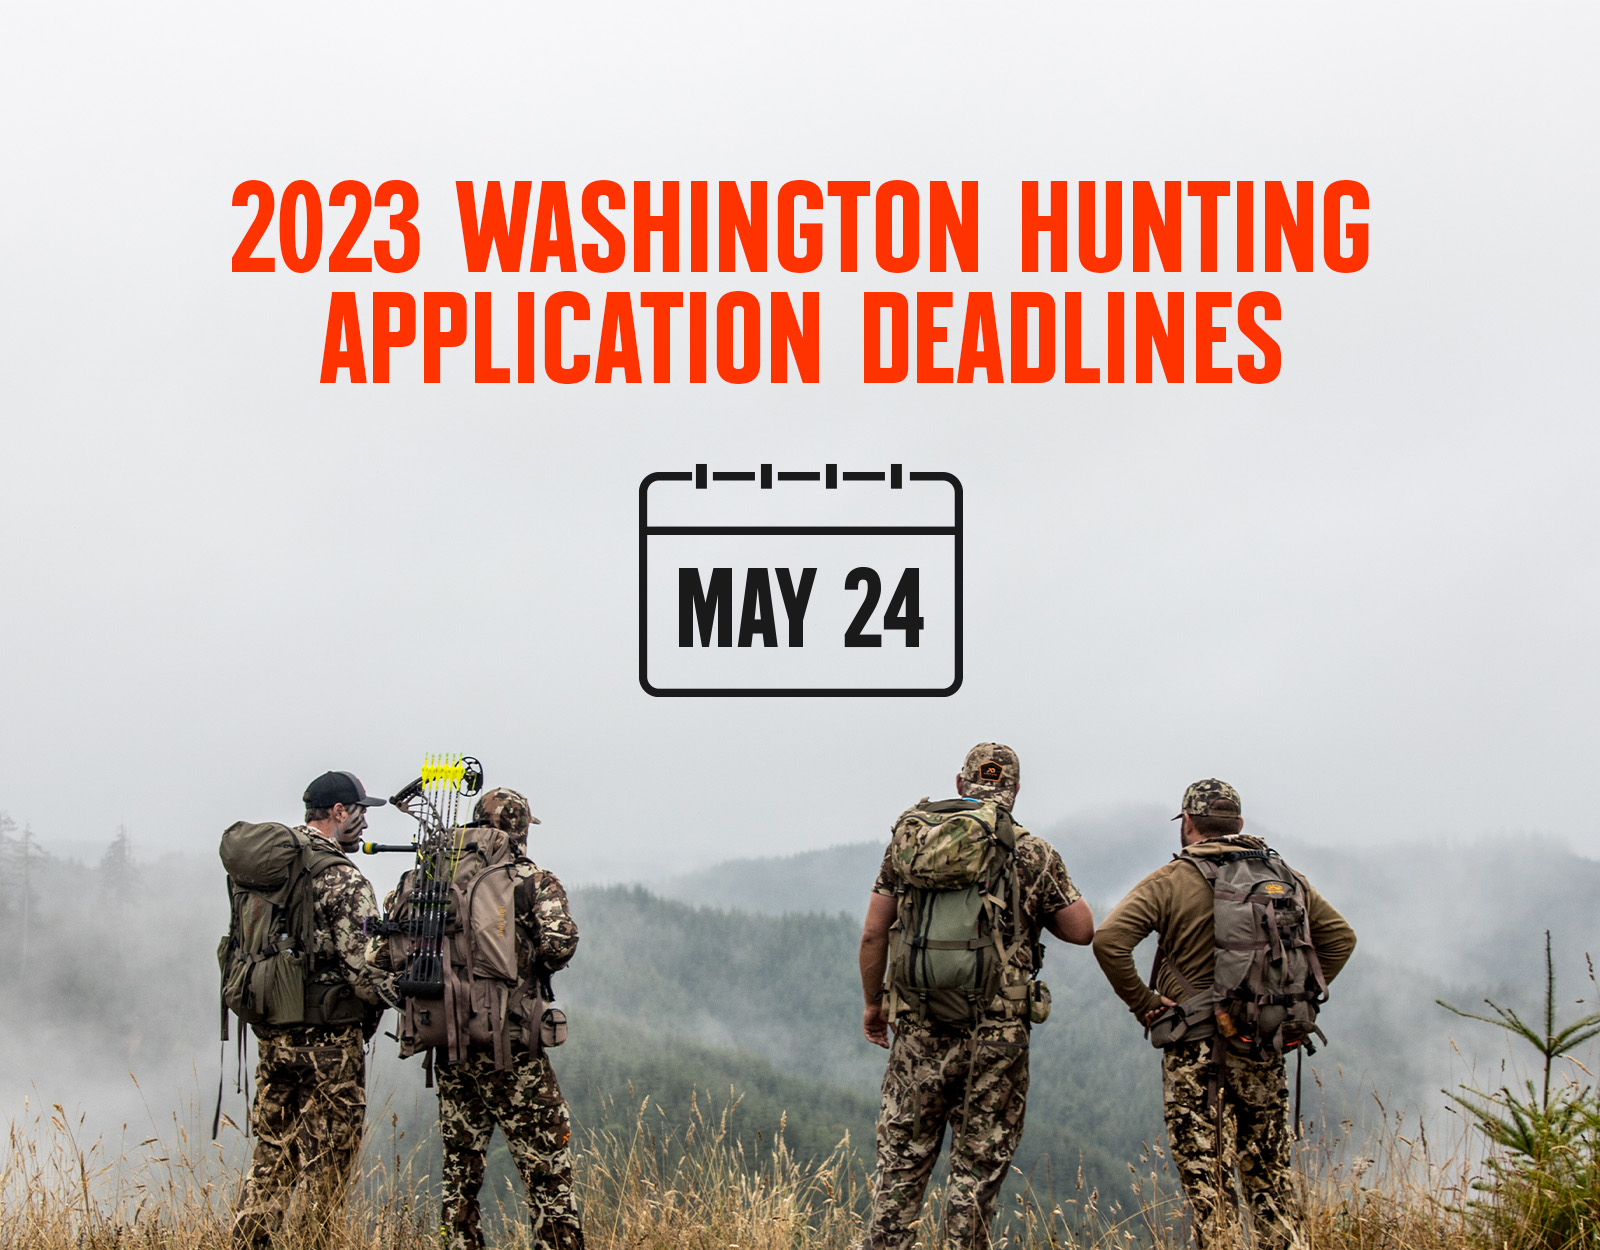 Washington hunting application deadlines